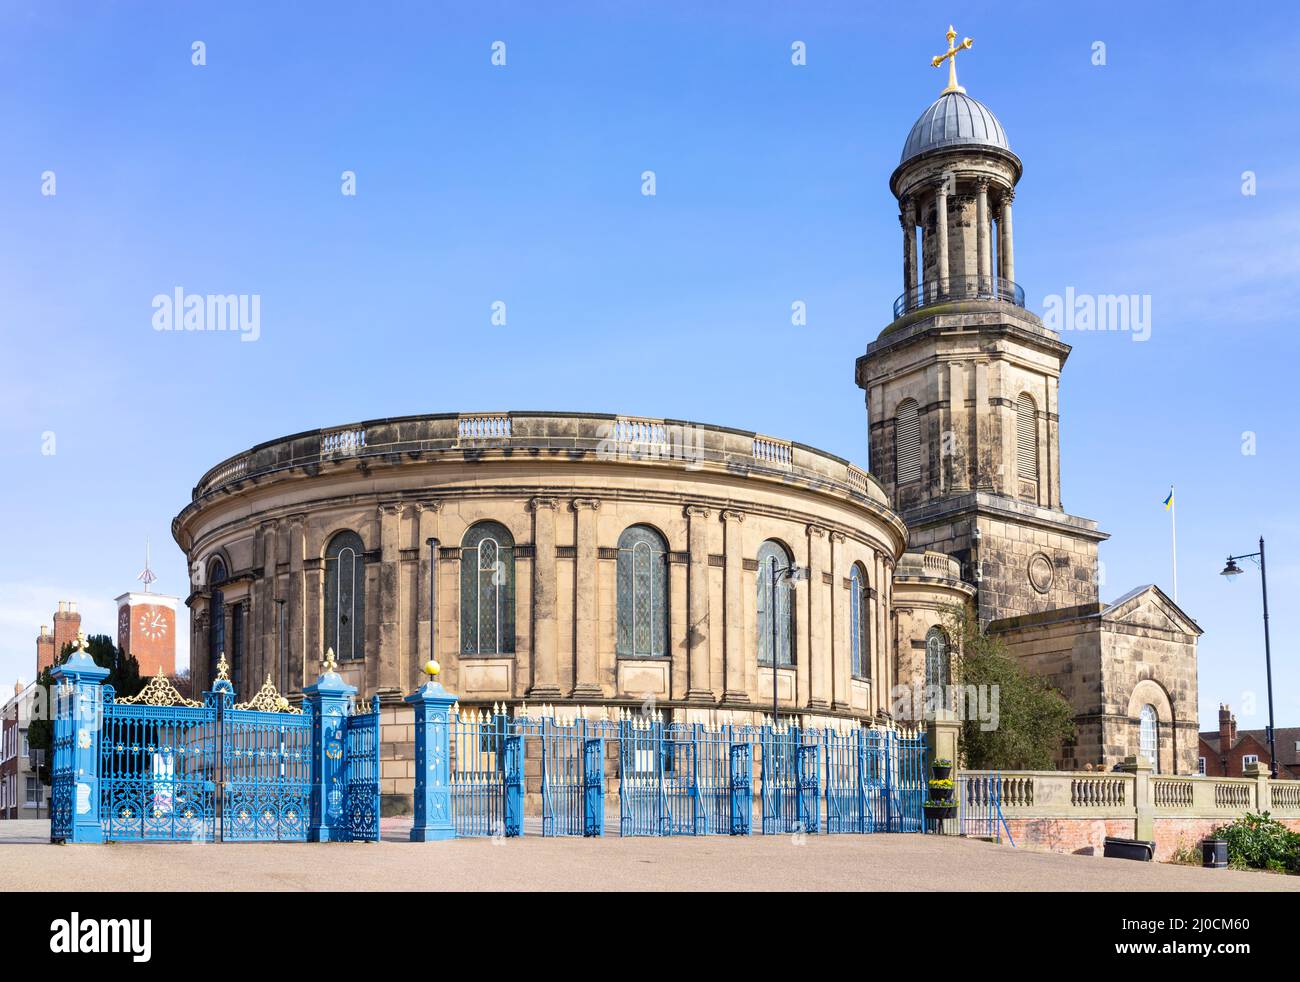 St Chads Church or St Chad’s with St Mary’s church Shrewsbury Shropshire England UK GB Europe Stock Photo